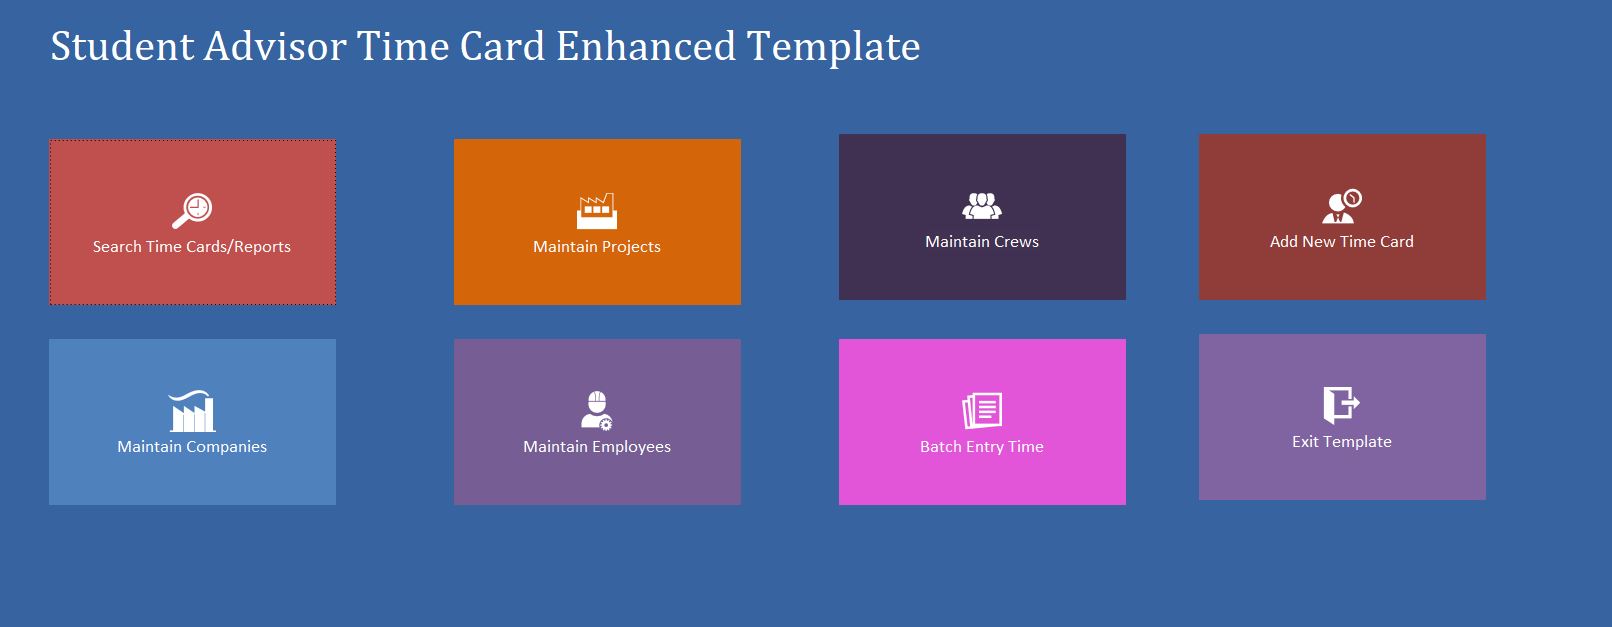 Enhanced Student Advisor Time Card Template | Time Card Database